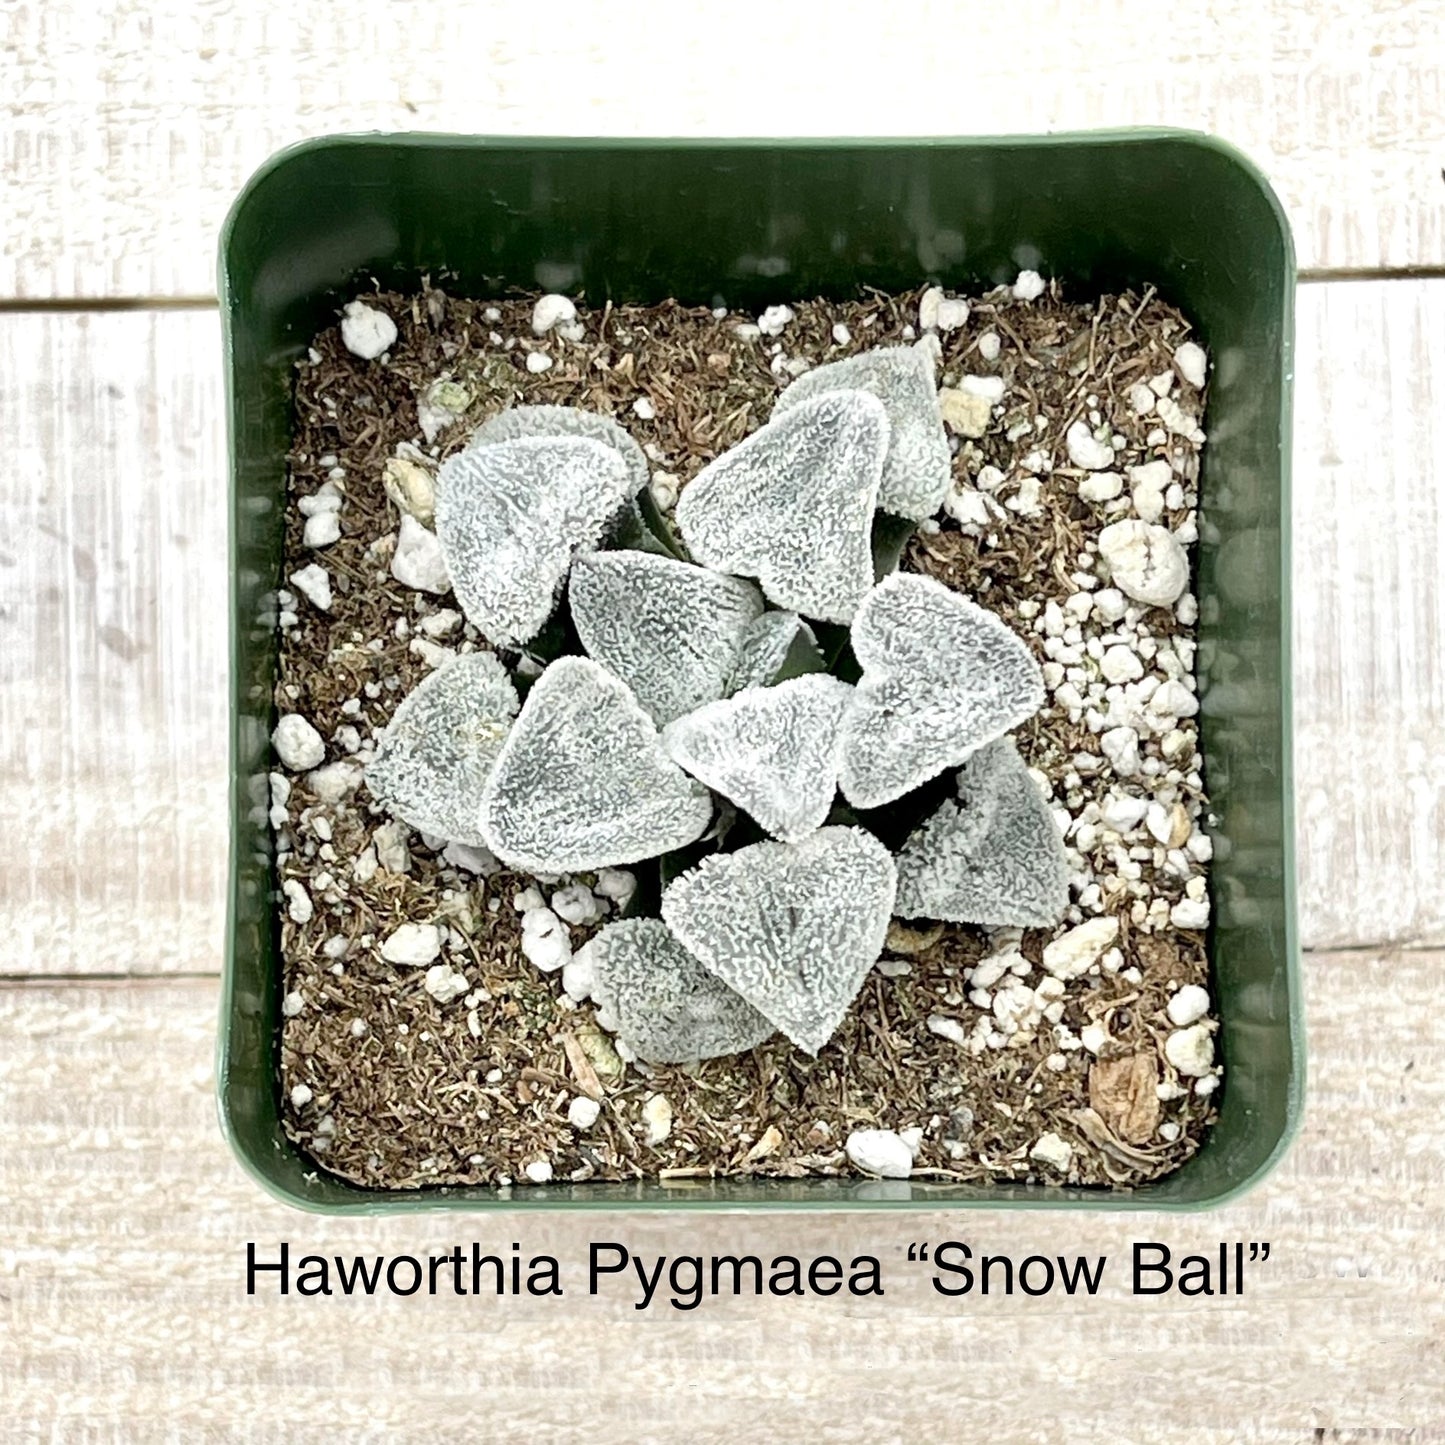 Rare Haworthia Pygmaea “Snow Ball”